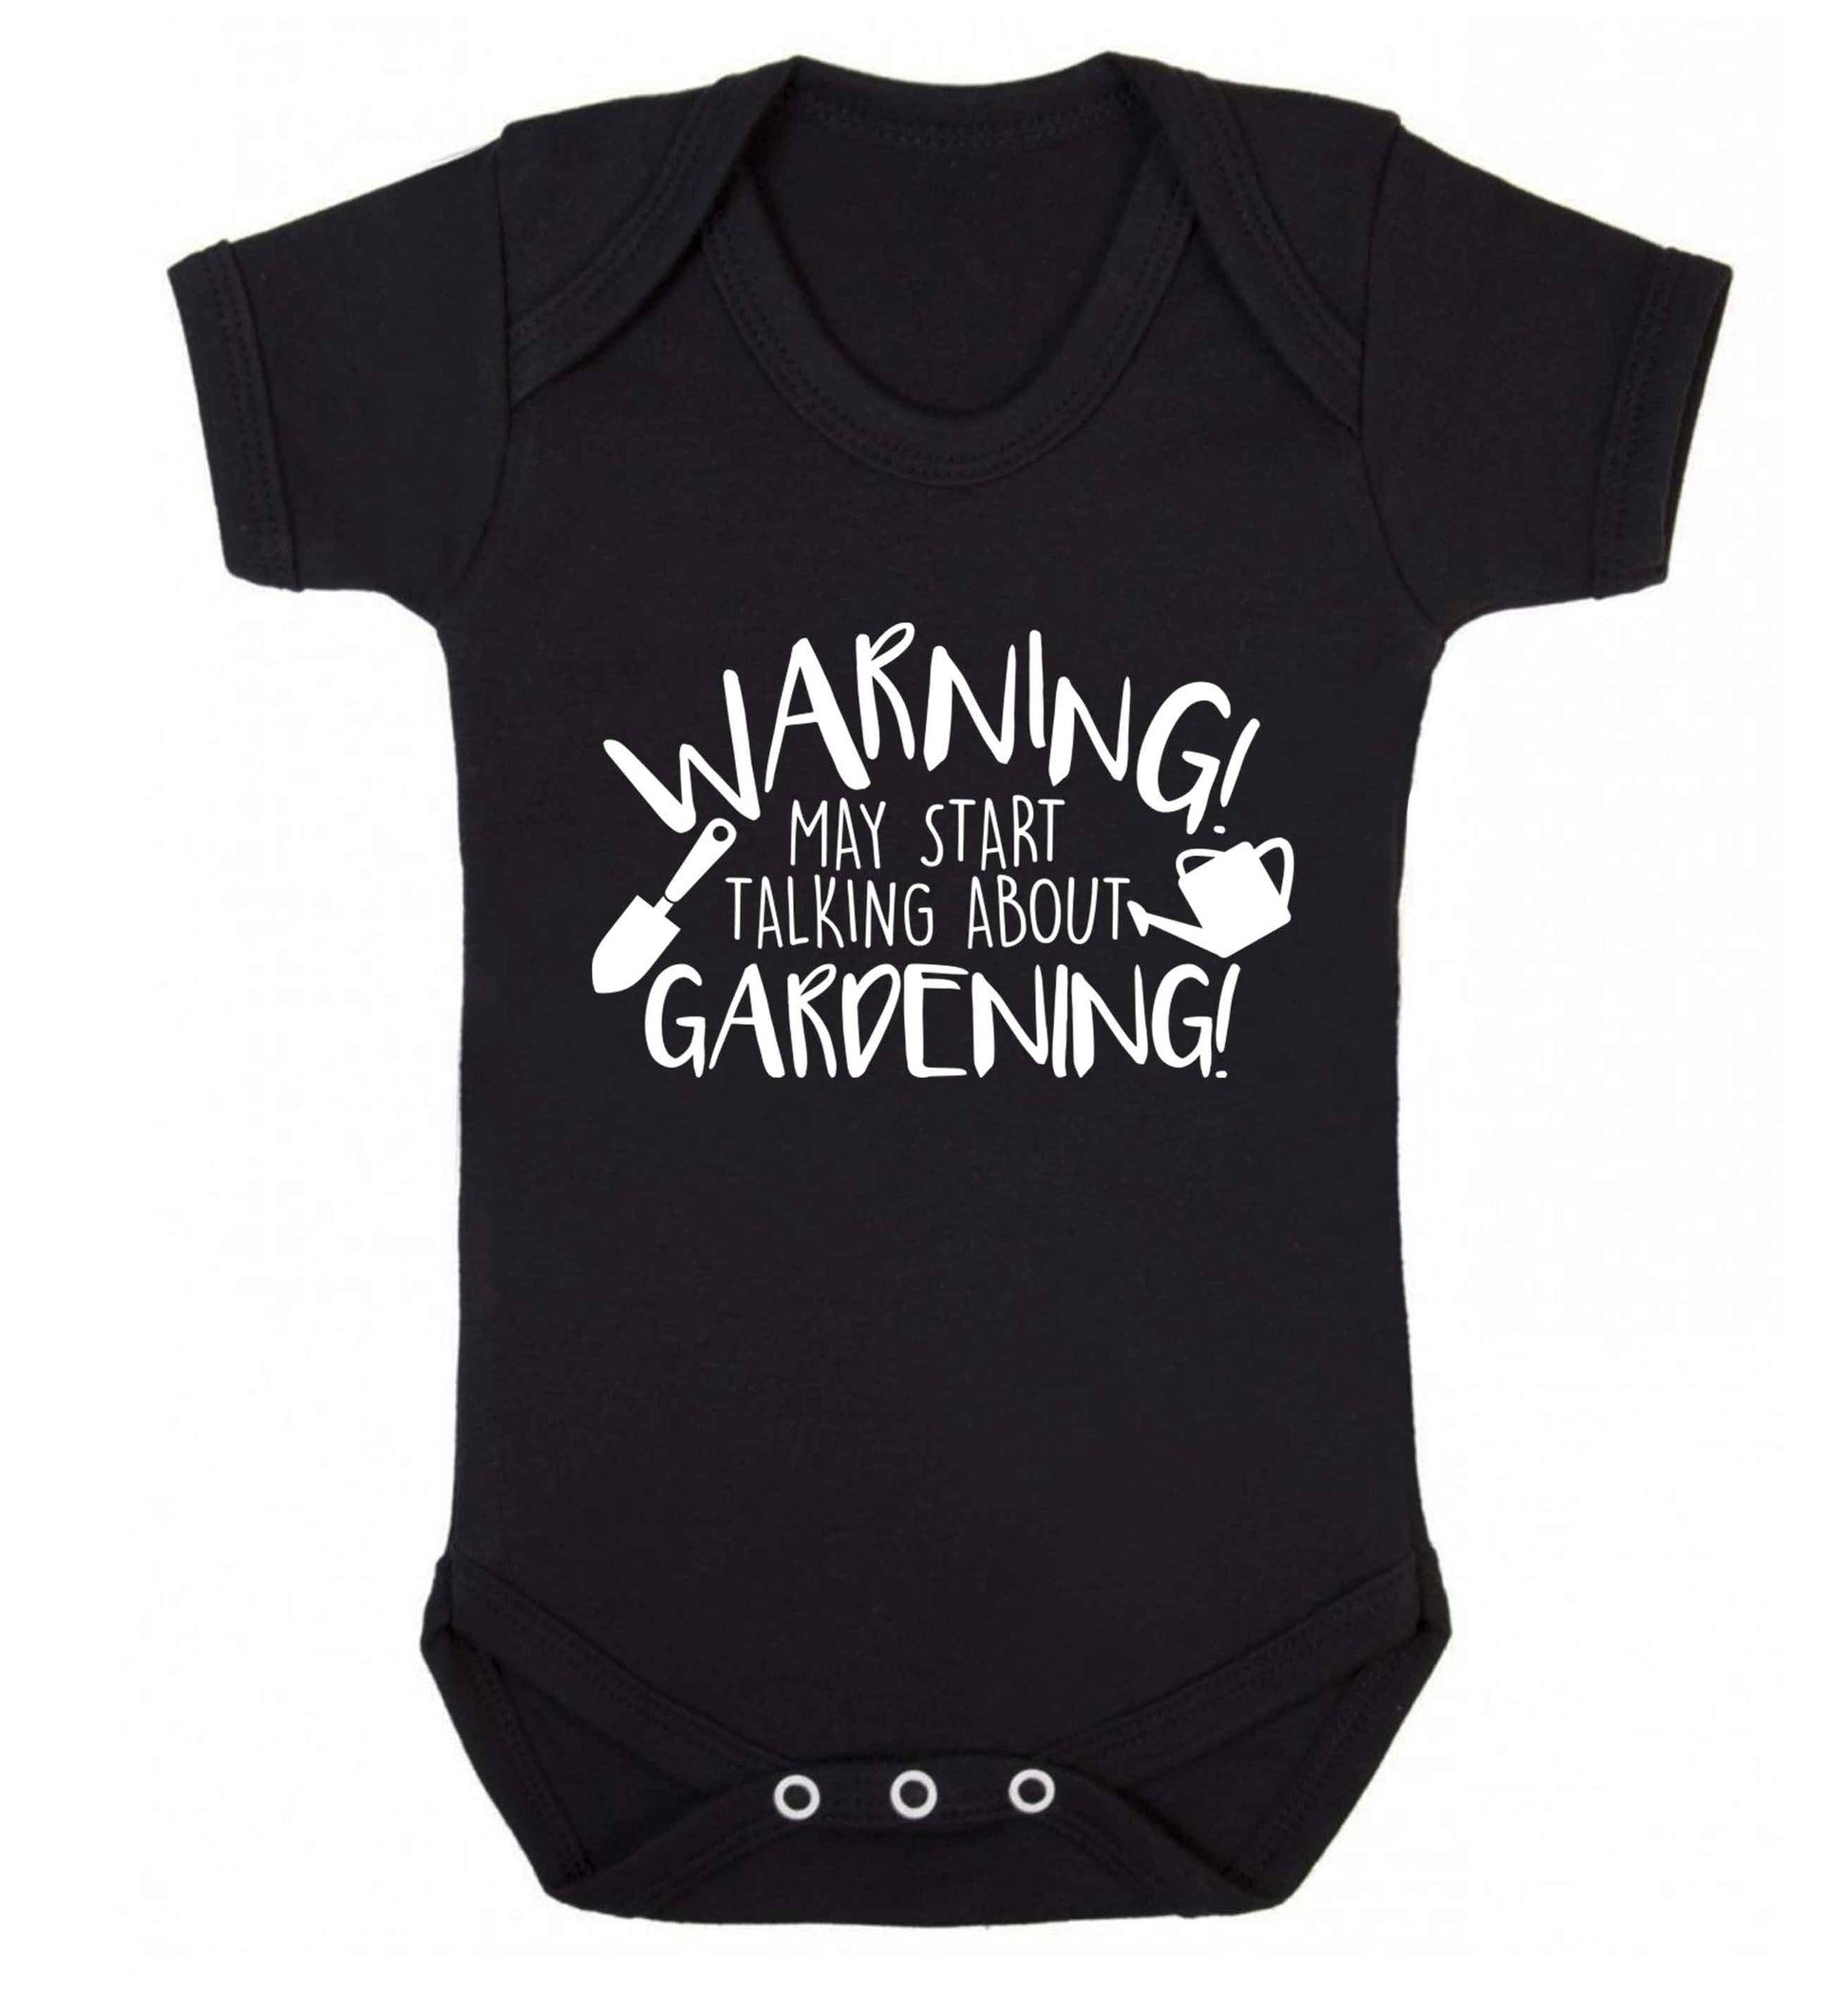 Warning may start talking about gardening Baby Vest black 18-24 months